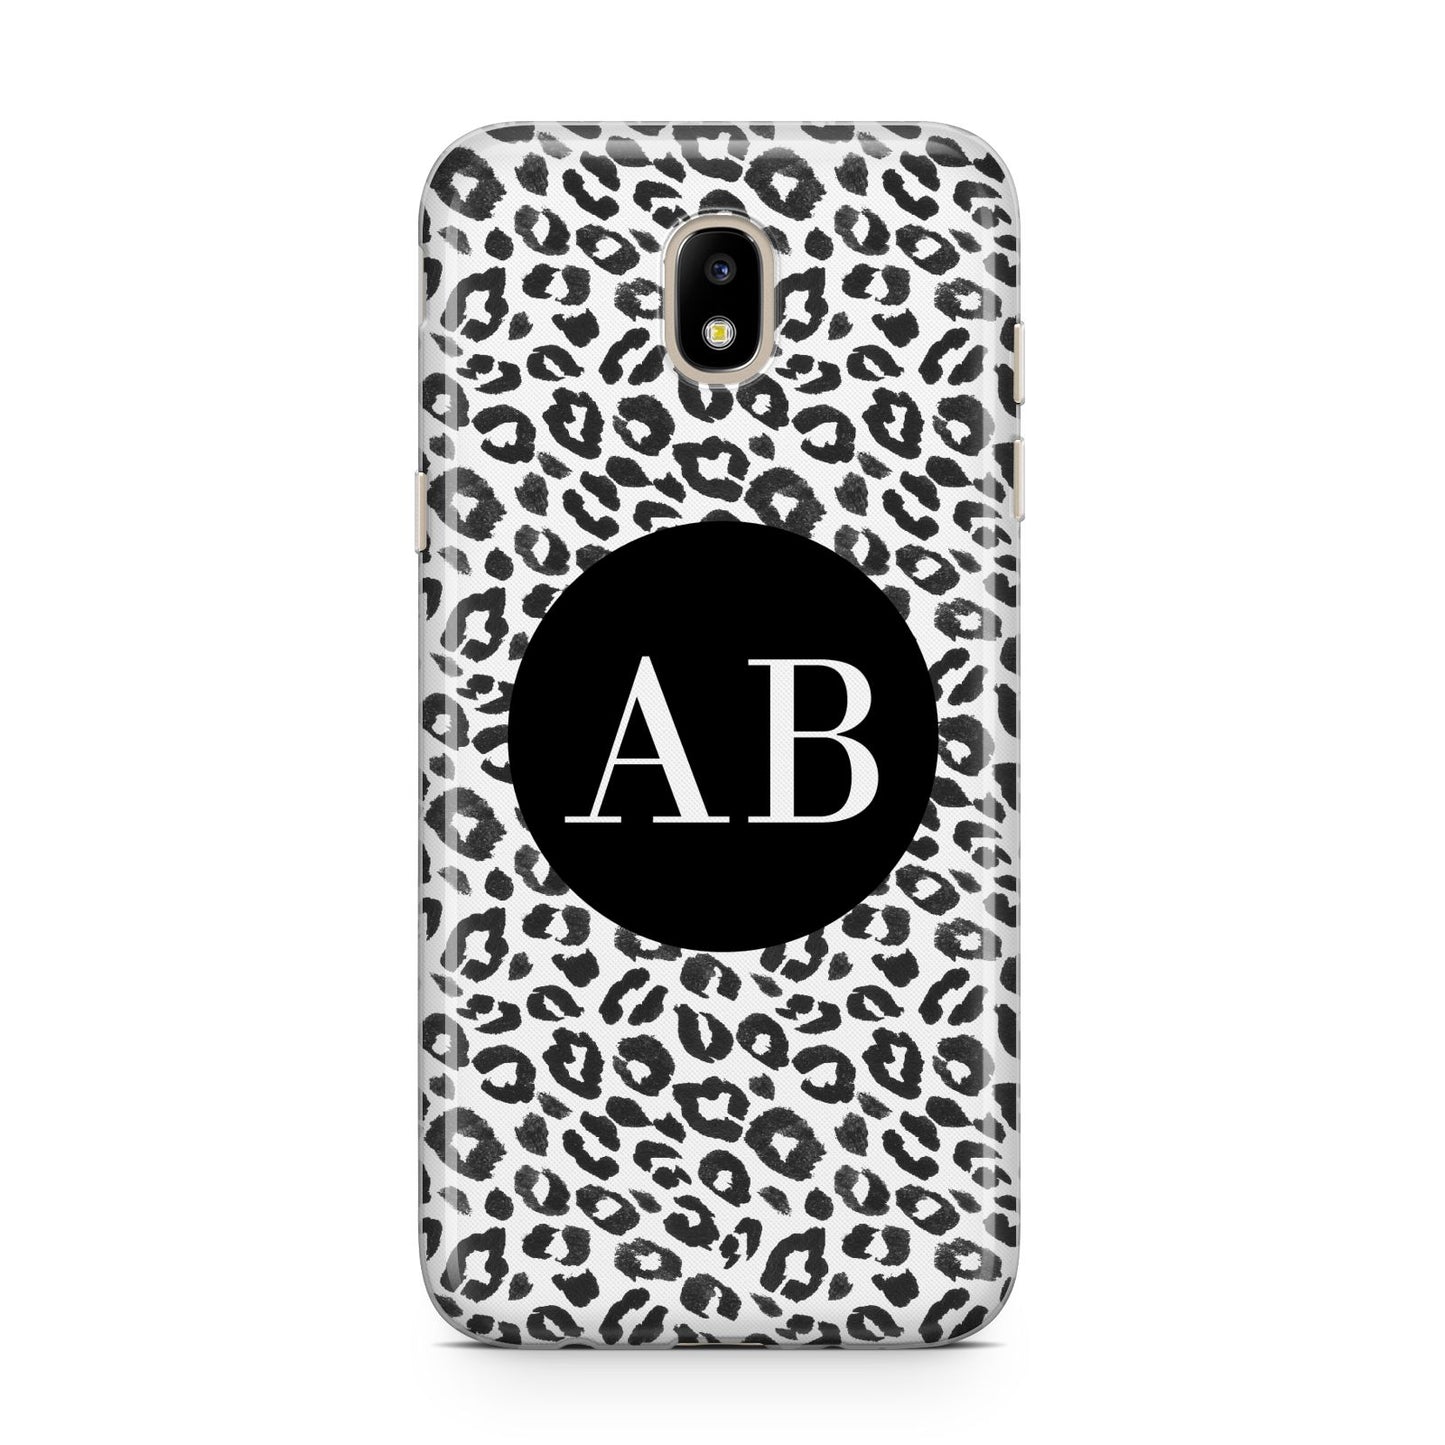 Leopard Print Black and White Samsung J5 2017 Case